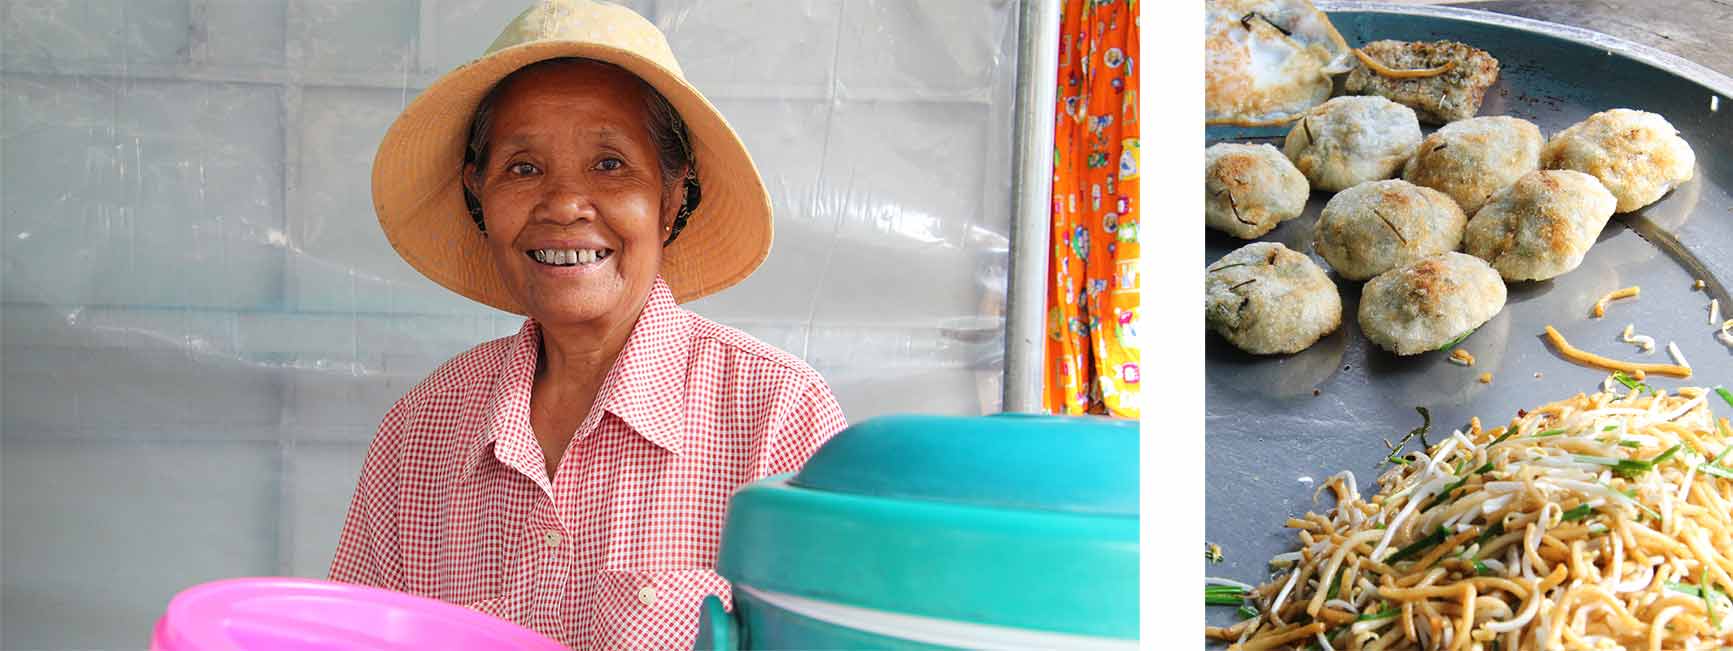 Marktfrau, Siem Reap